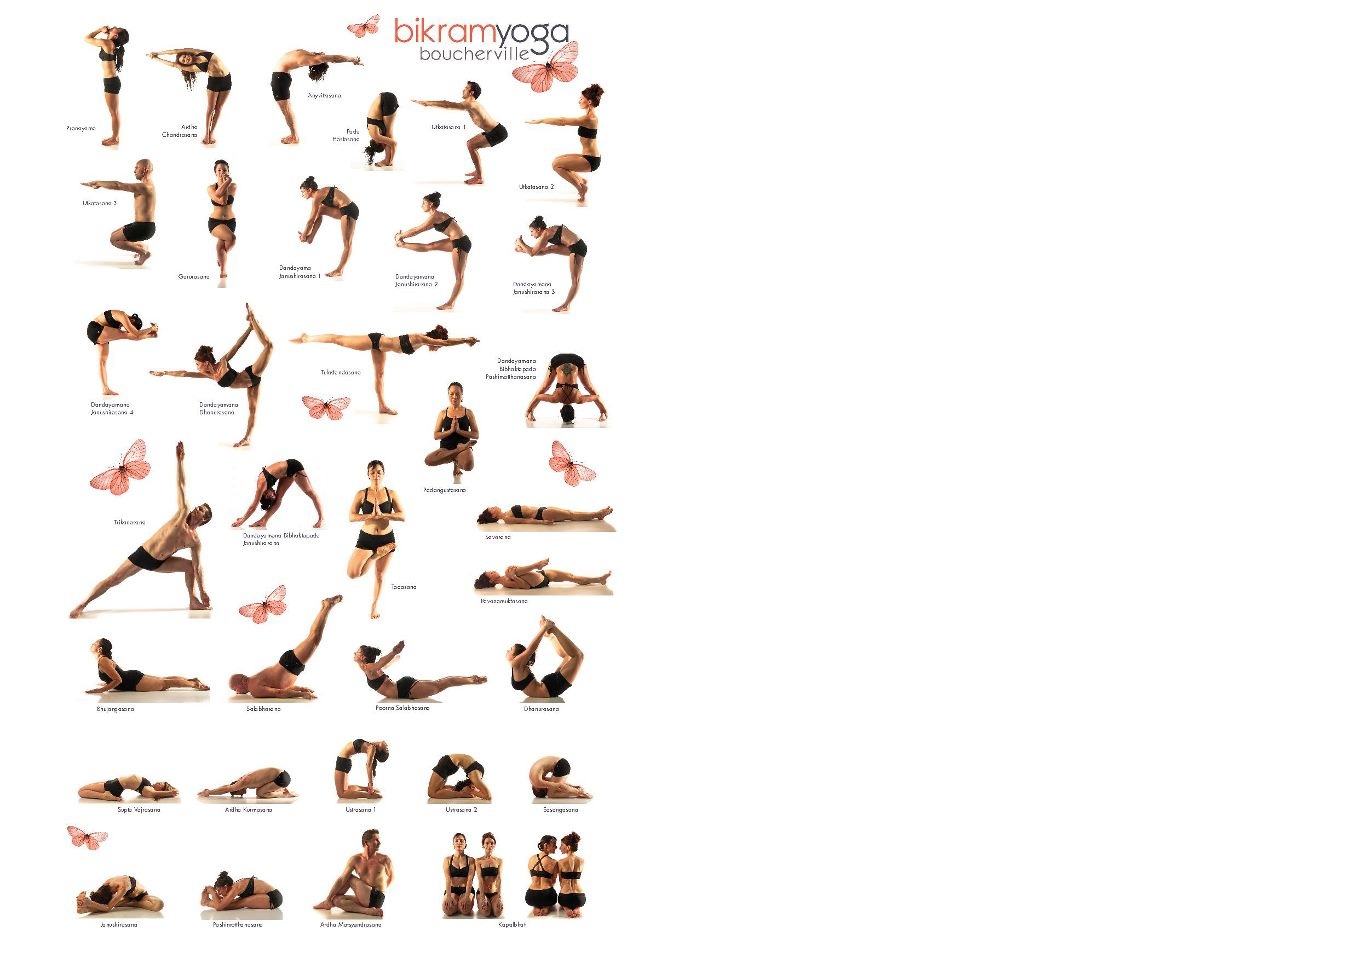 77 Internal, External, And Emotional Health Benefits Of Yoga